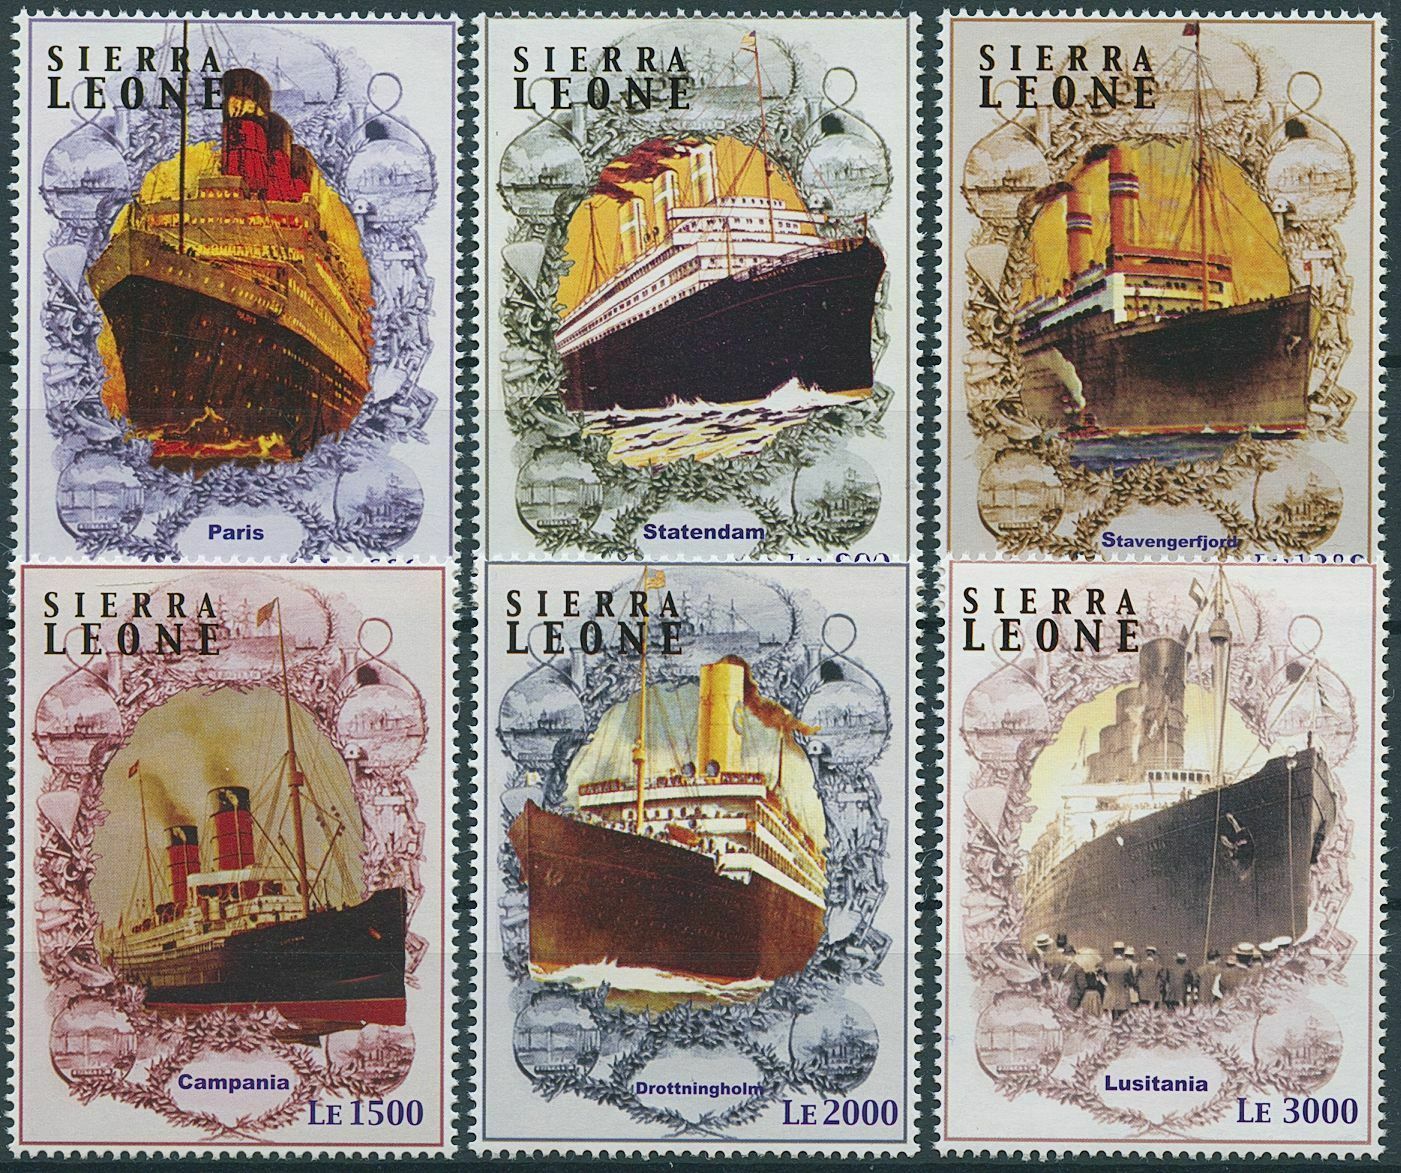 Sierra Leone 2004 MNH Ships Stamps Ocean Liners Lusitania Statendam Paris 6v Set